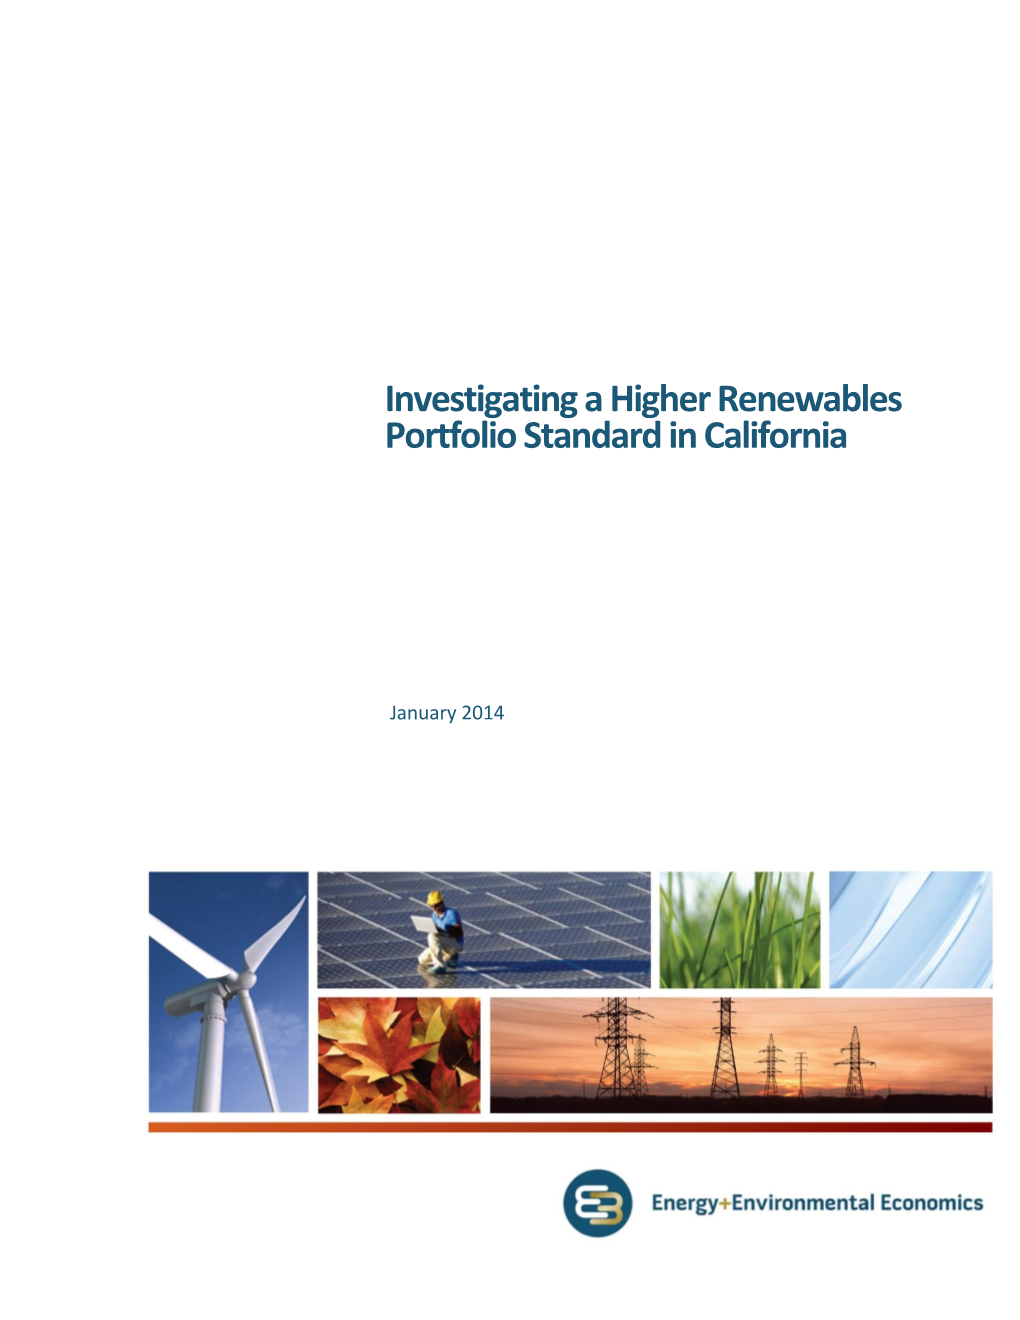 Investigating a Higher Renewables Portfolio Standard in California